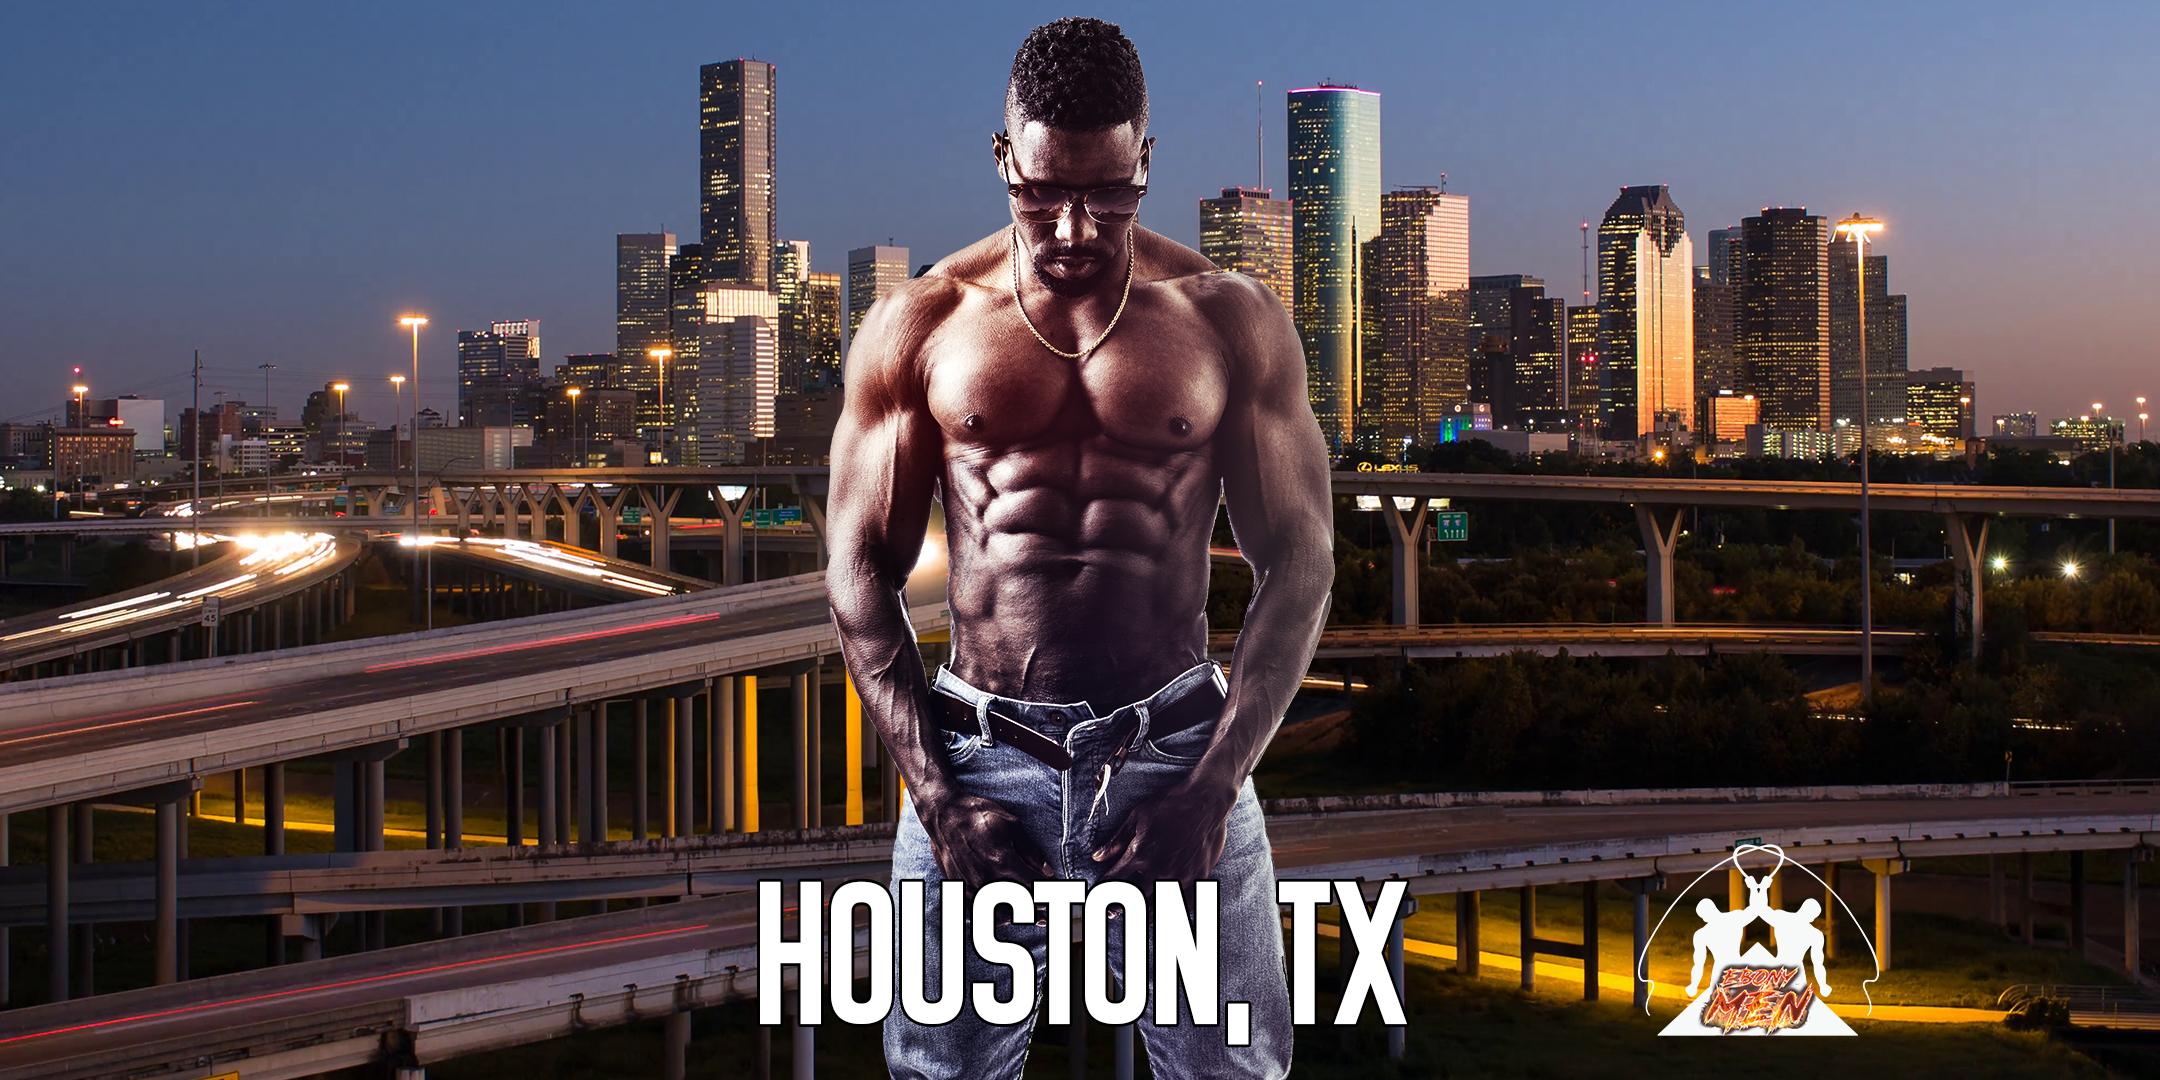 Ebony Men Black Male Revue Strip Clubs & Black Male Strippers Houston TX 8-10 PM